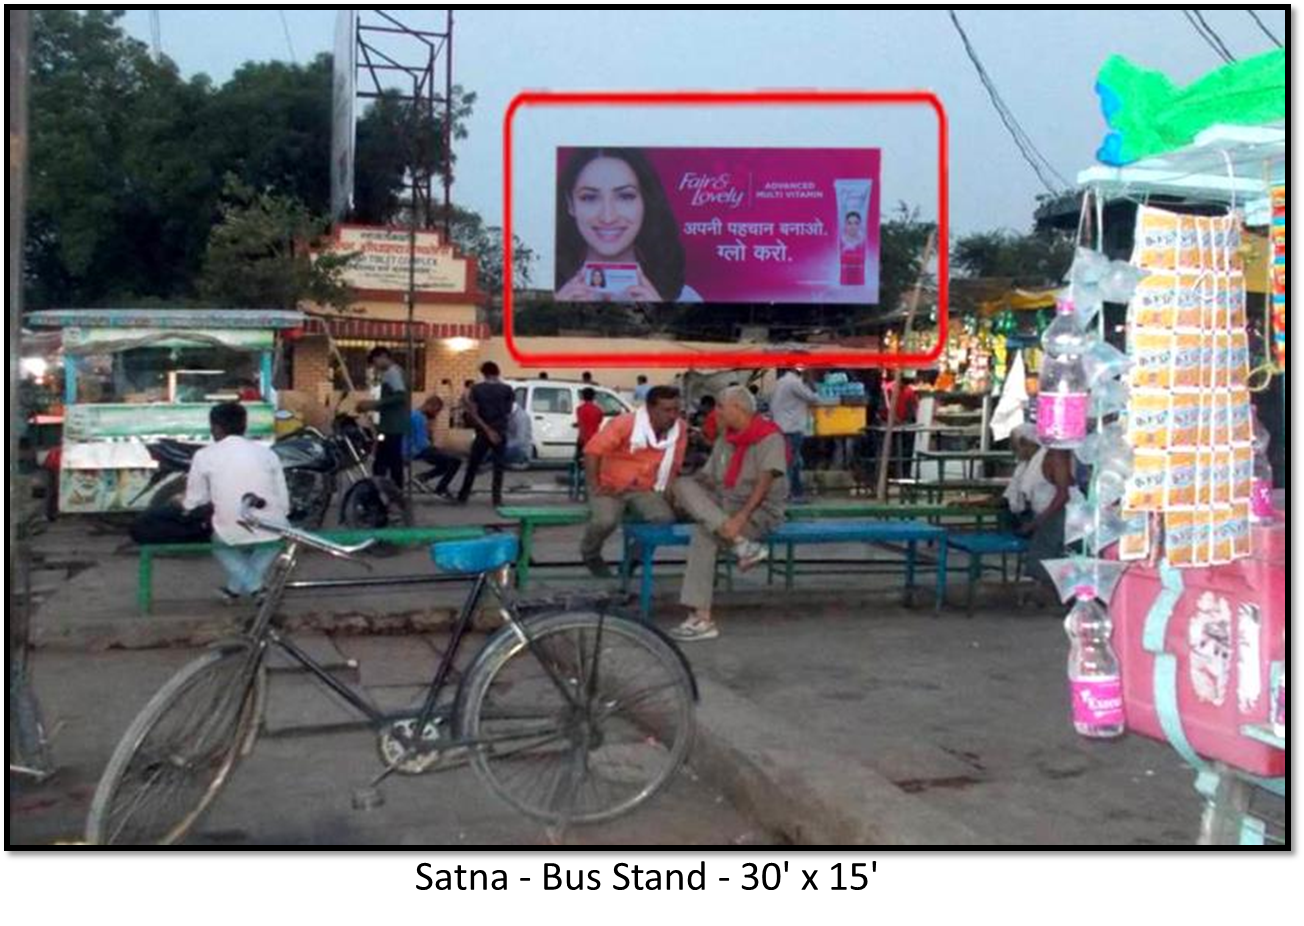 Billboard - Bus Station, Satna, Madhya Pradesh